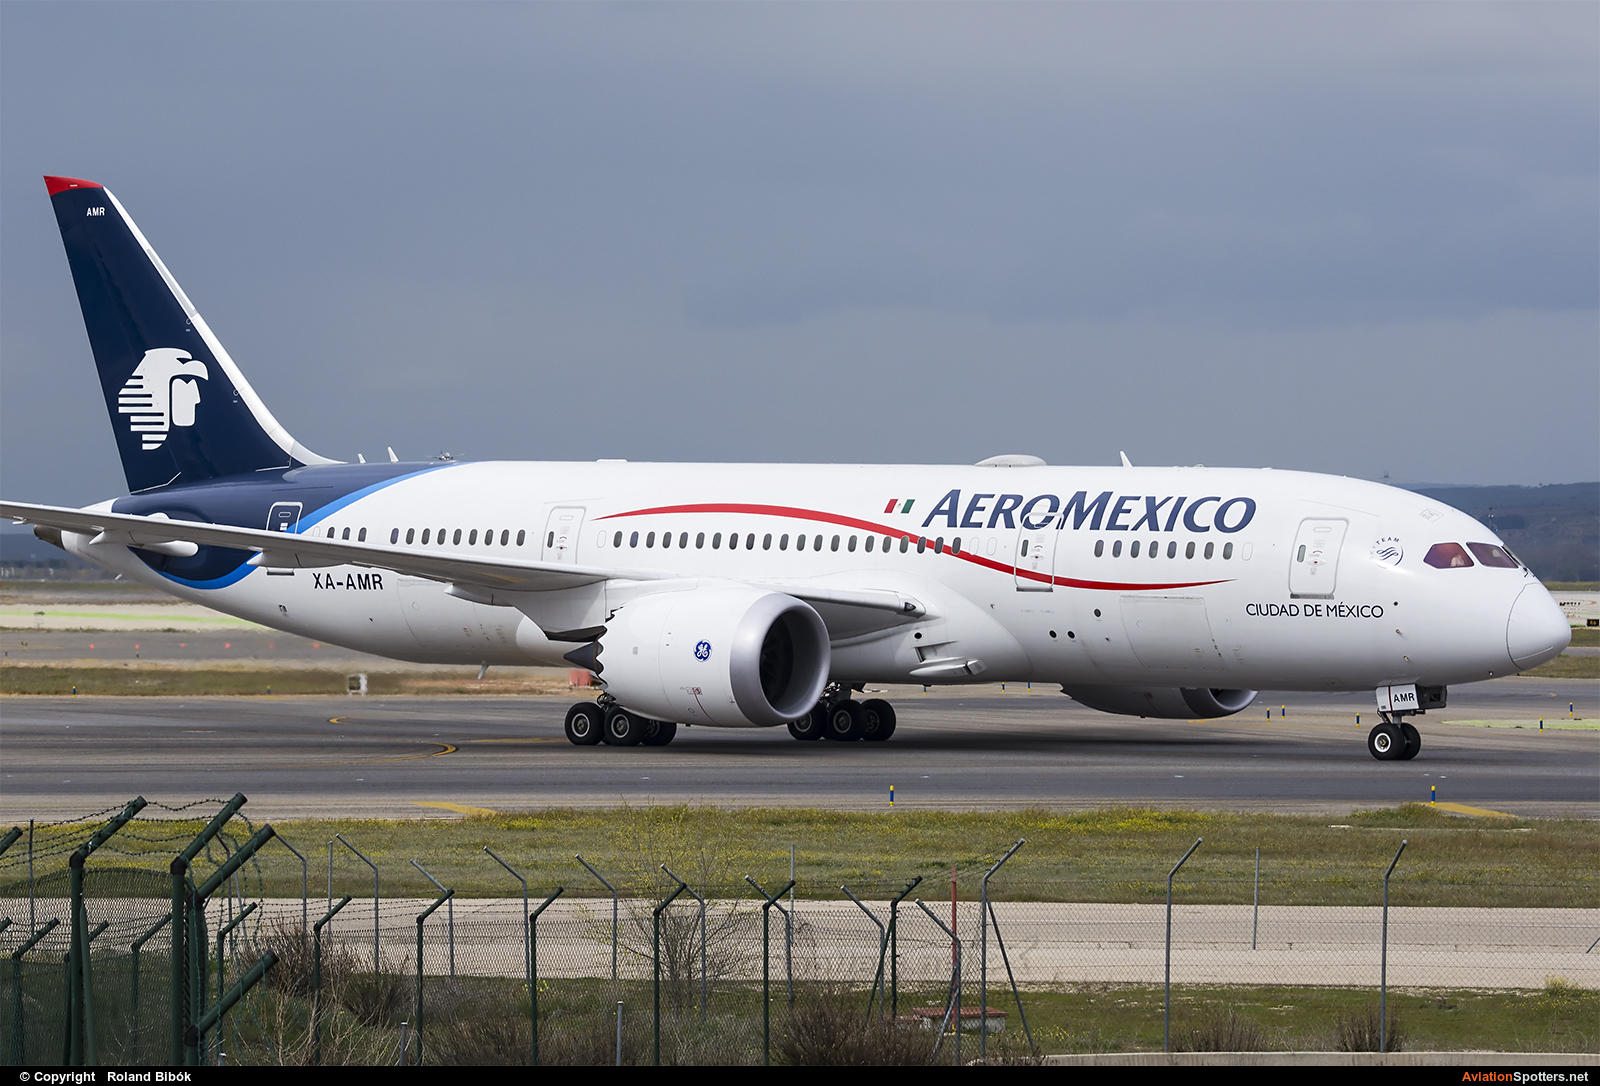 Aeromexico  -  787-8 Dreamliner  (XA-AMR) By Roland Bibók (Roland Bibok)